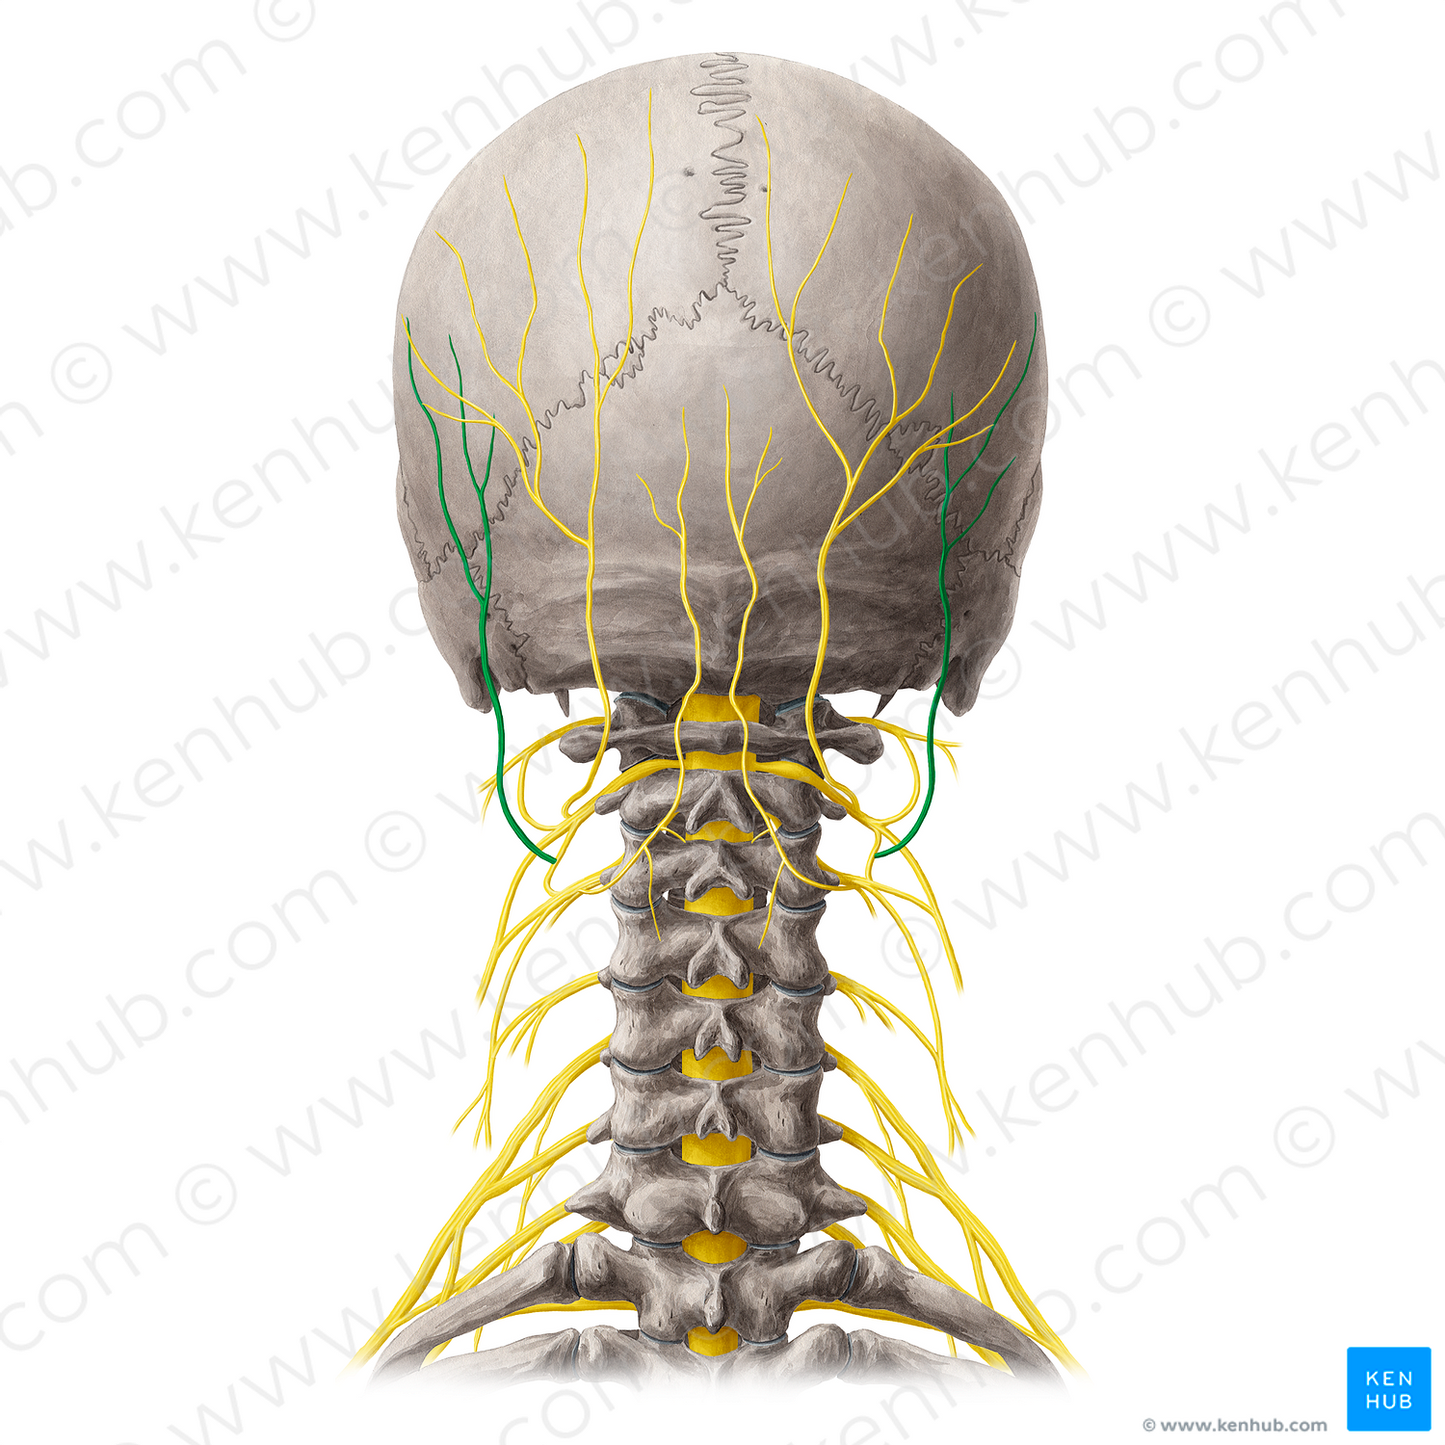 Lesser occipital nerve (#6611)